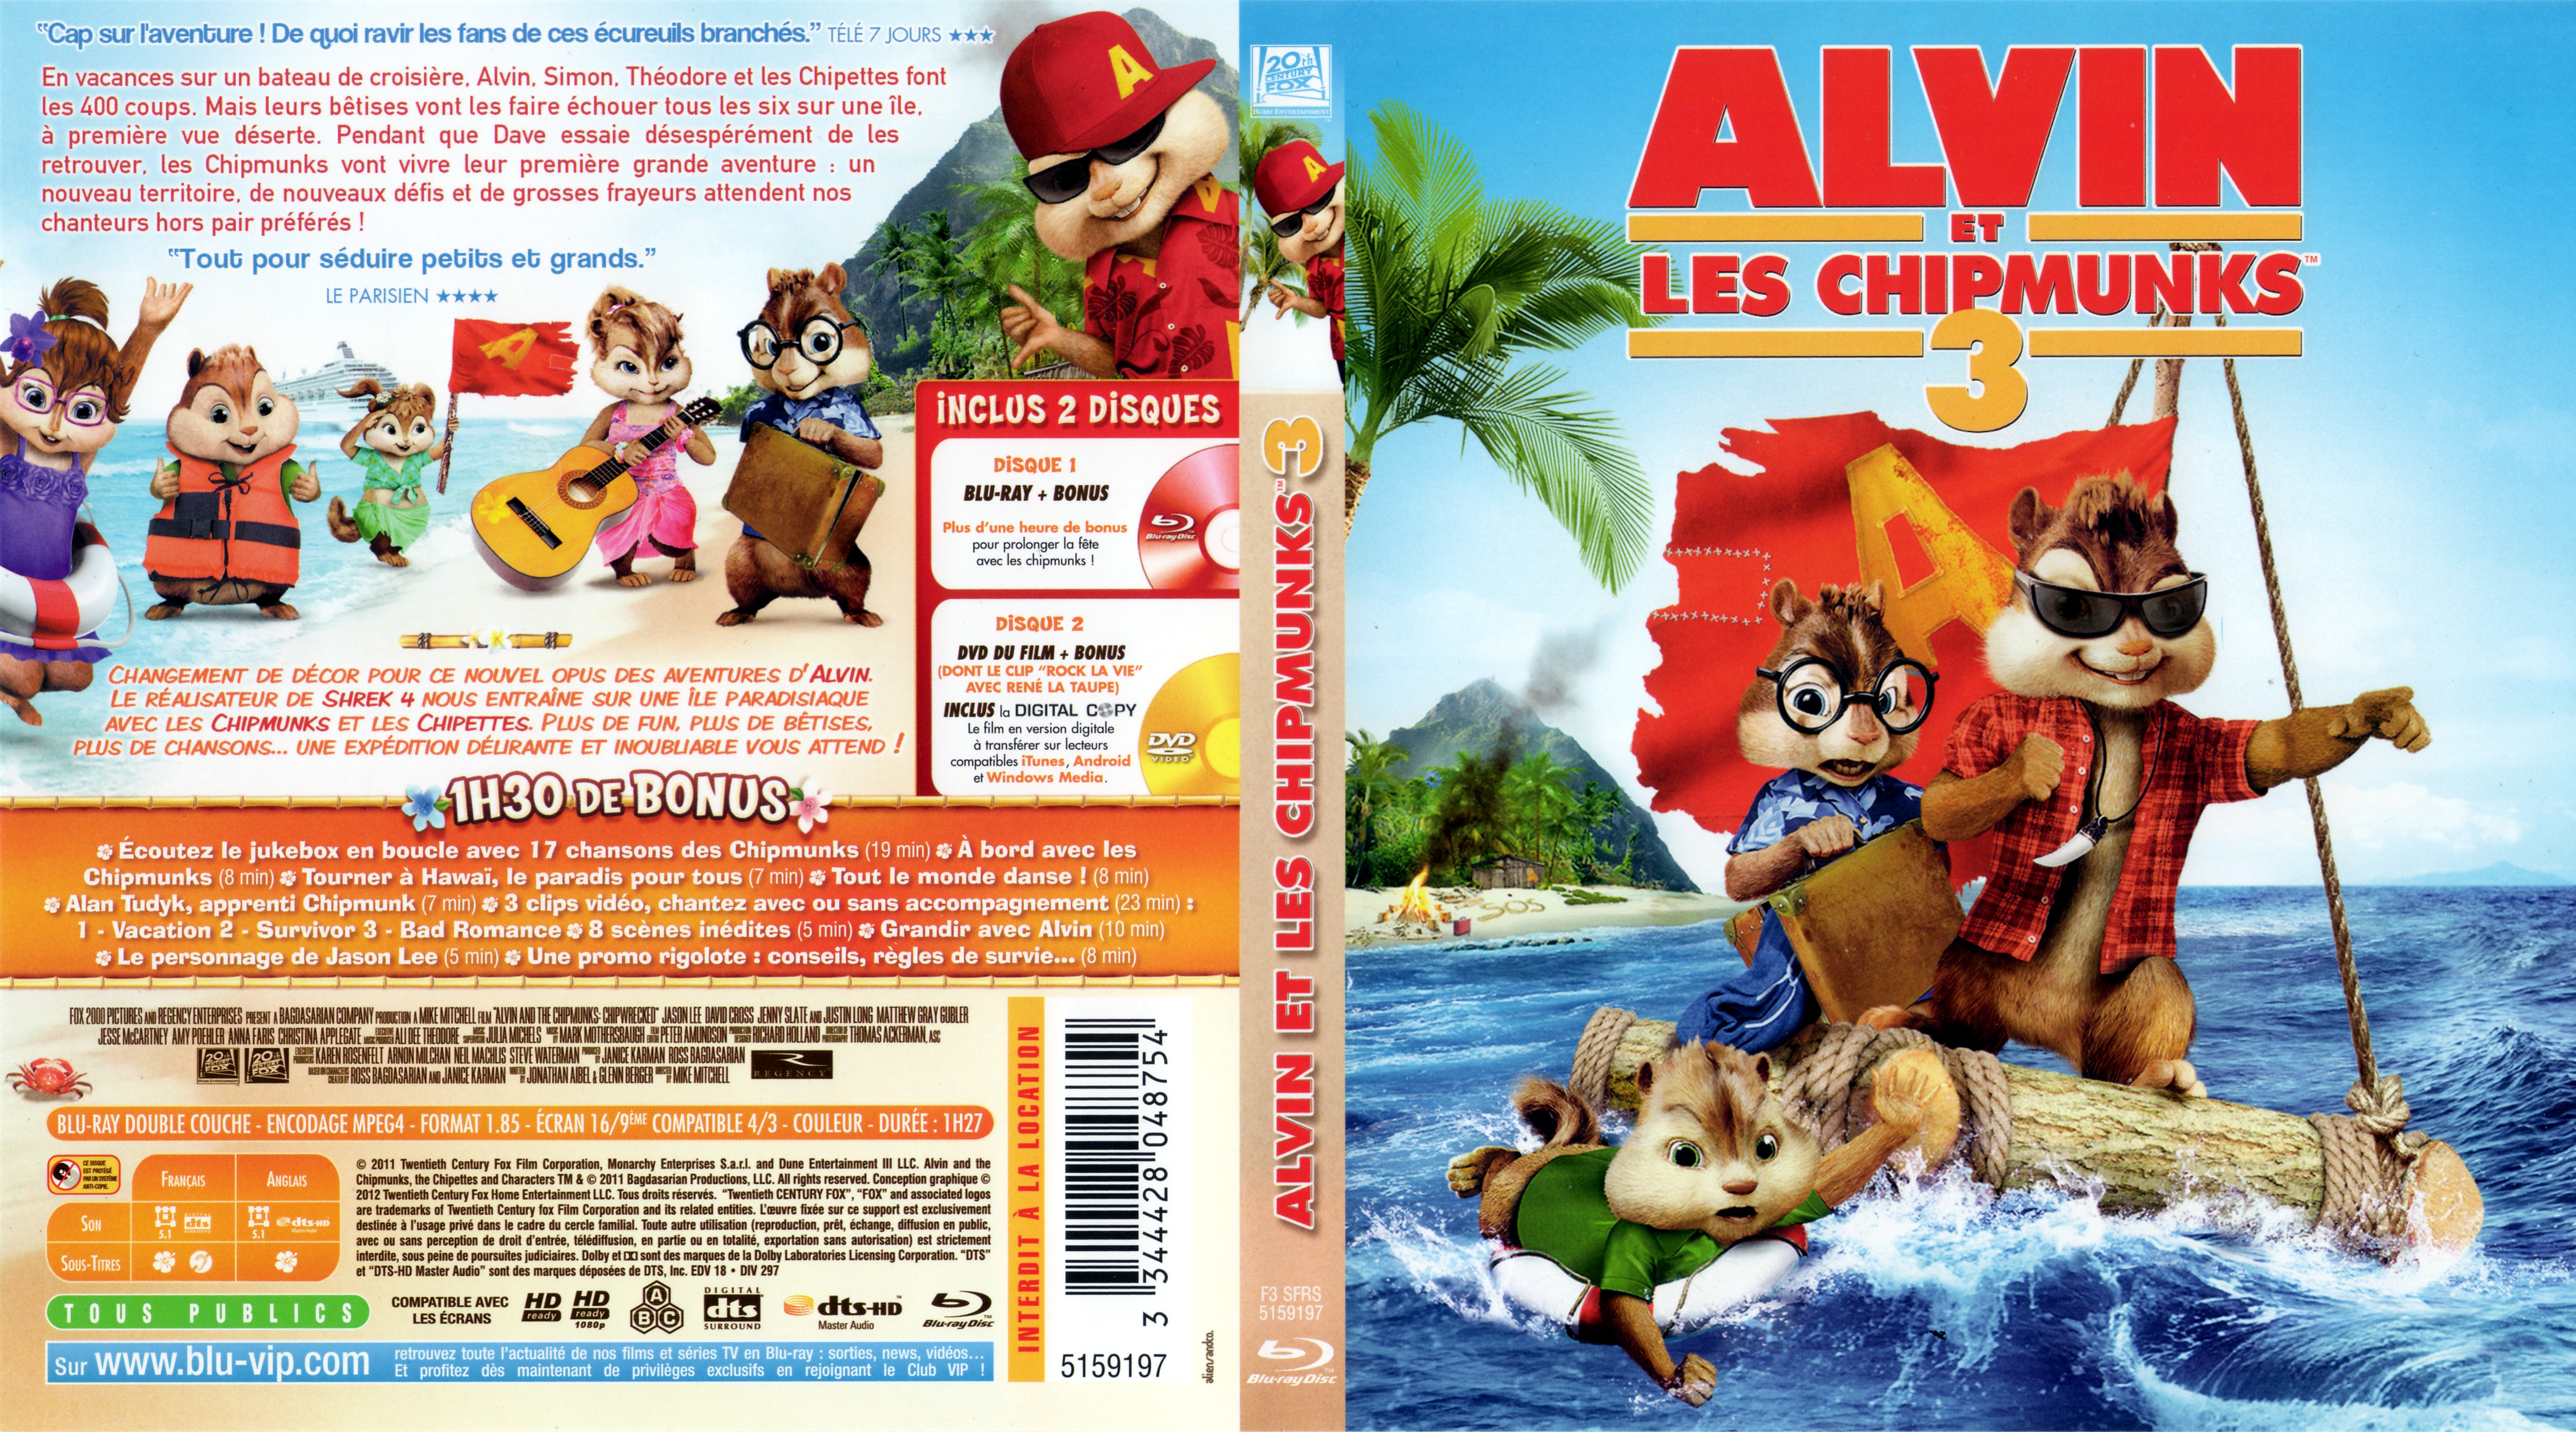 Jaquette DVD Alvin et les chipmunks 3 (BLU-RAY) v2